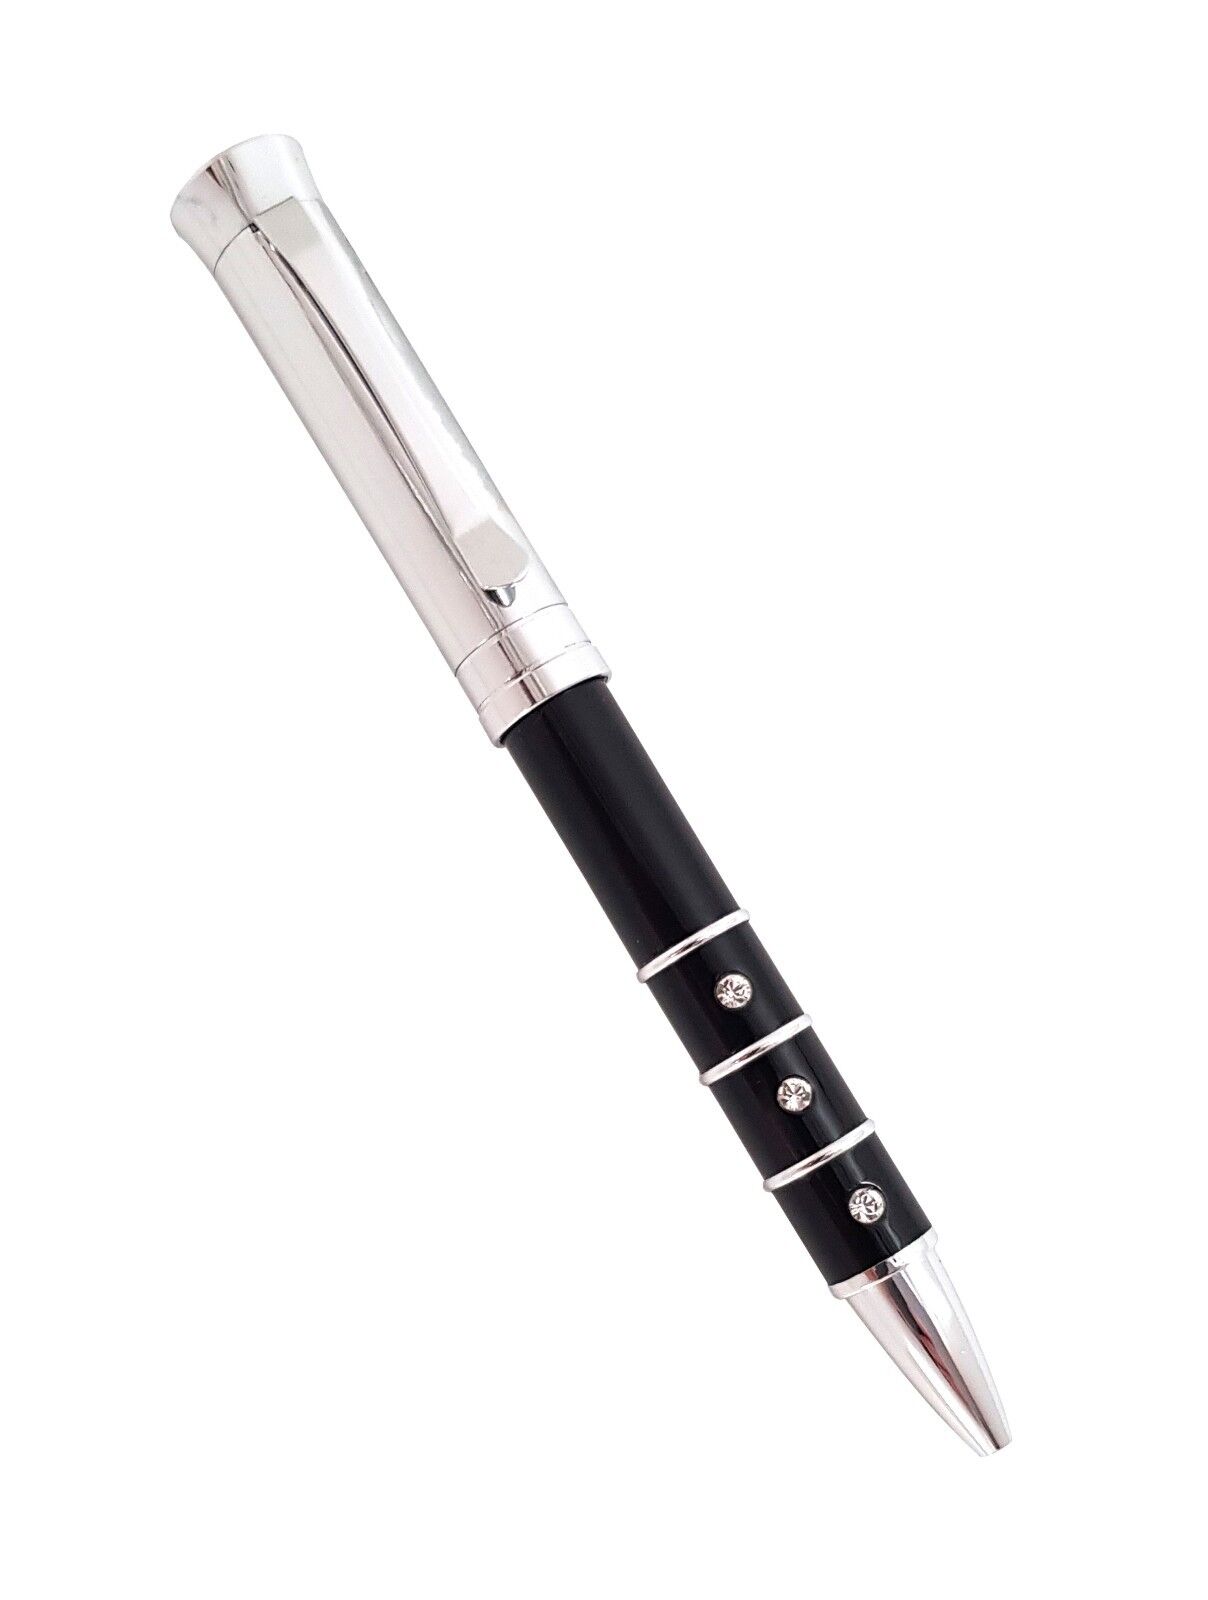 Crystal Style CF Ballpoint Pen, Metal Pen, High Quality, Standard Refill